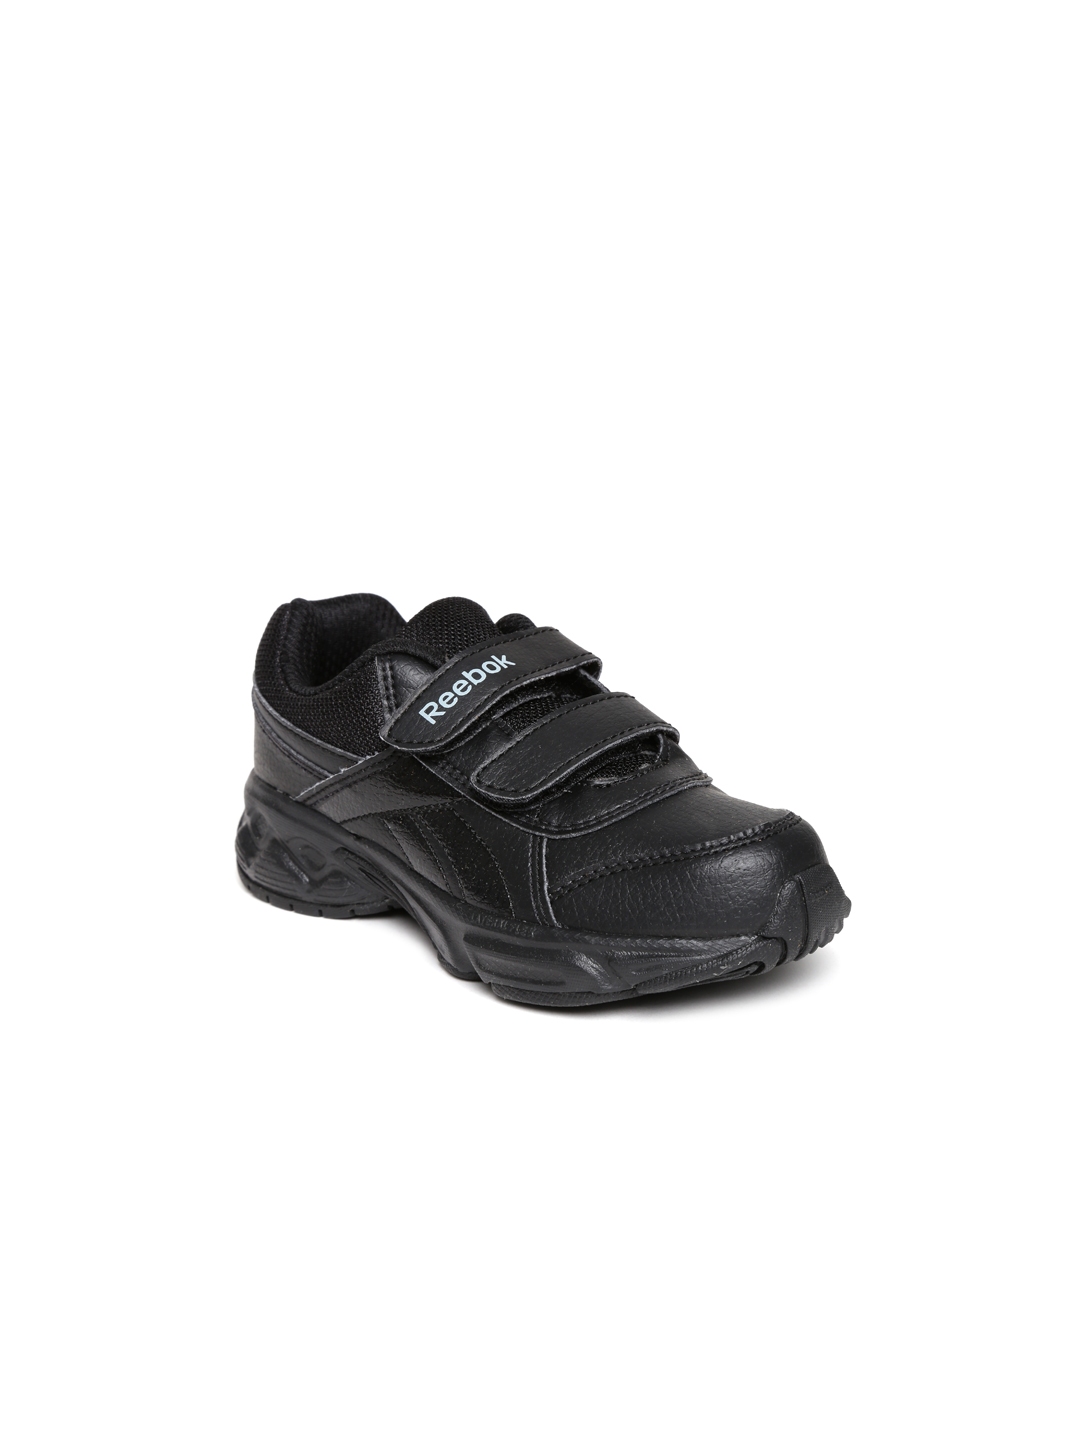 black reebok school shoes